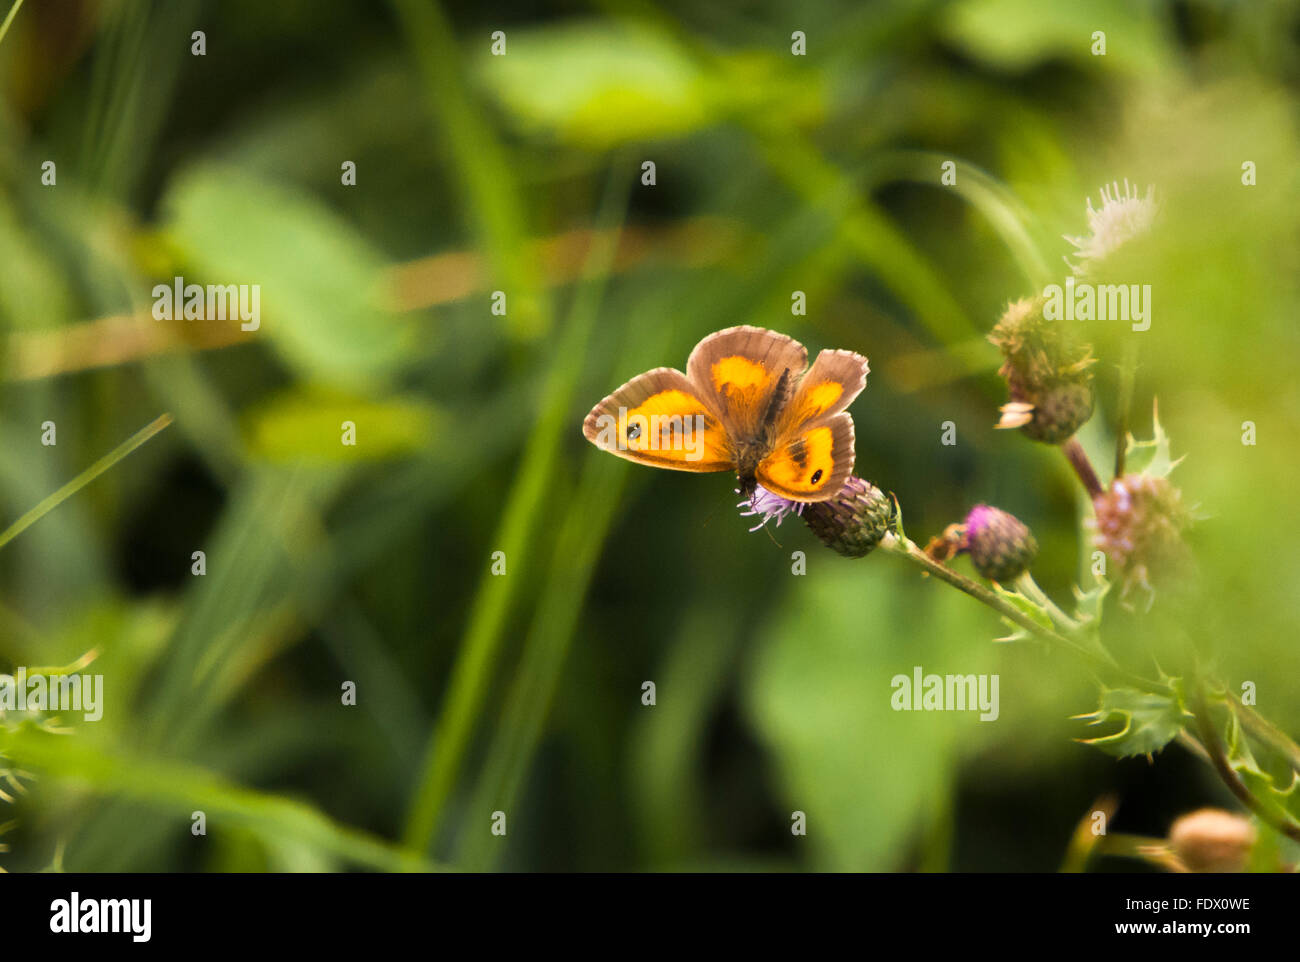 The male Gatekeeper butterfly, Pyronia tithonus, sat on a Saw Wort plant, Serratula tinctoria. Stock Photo